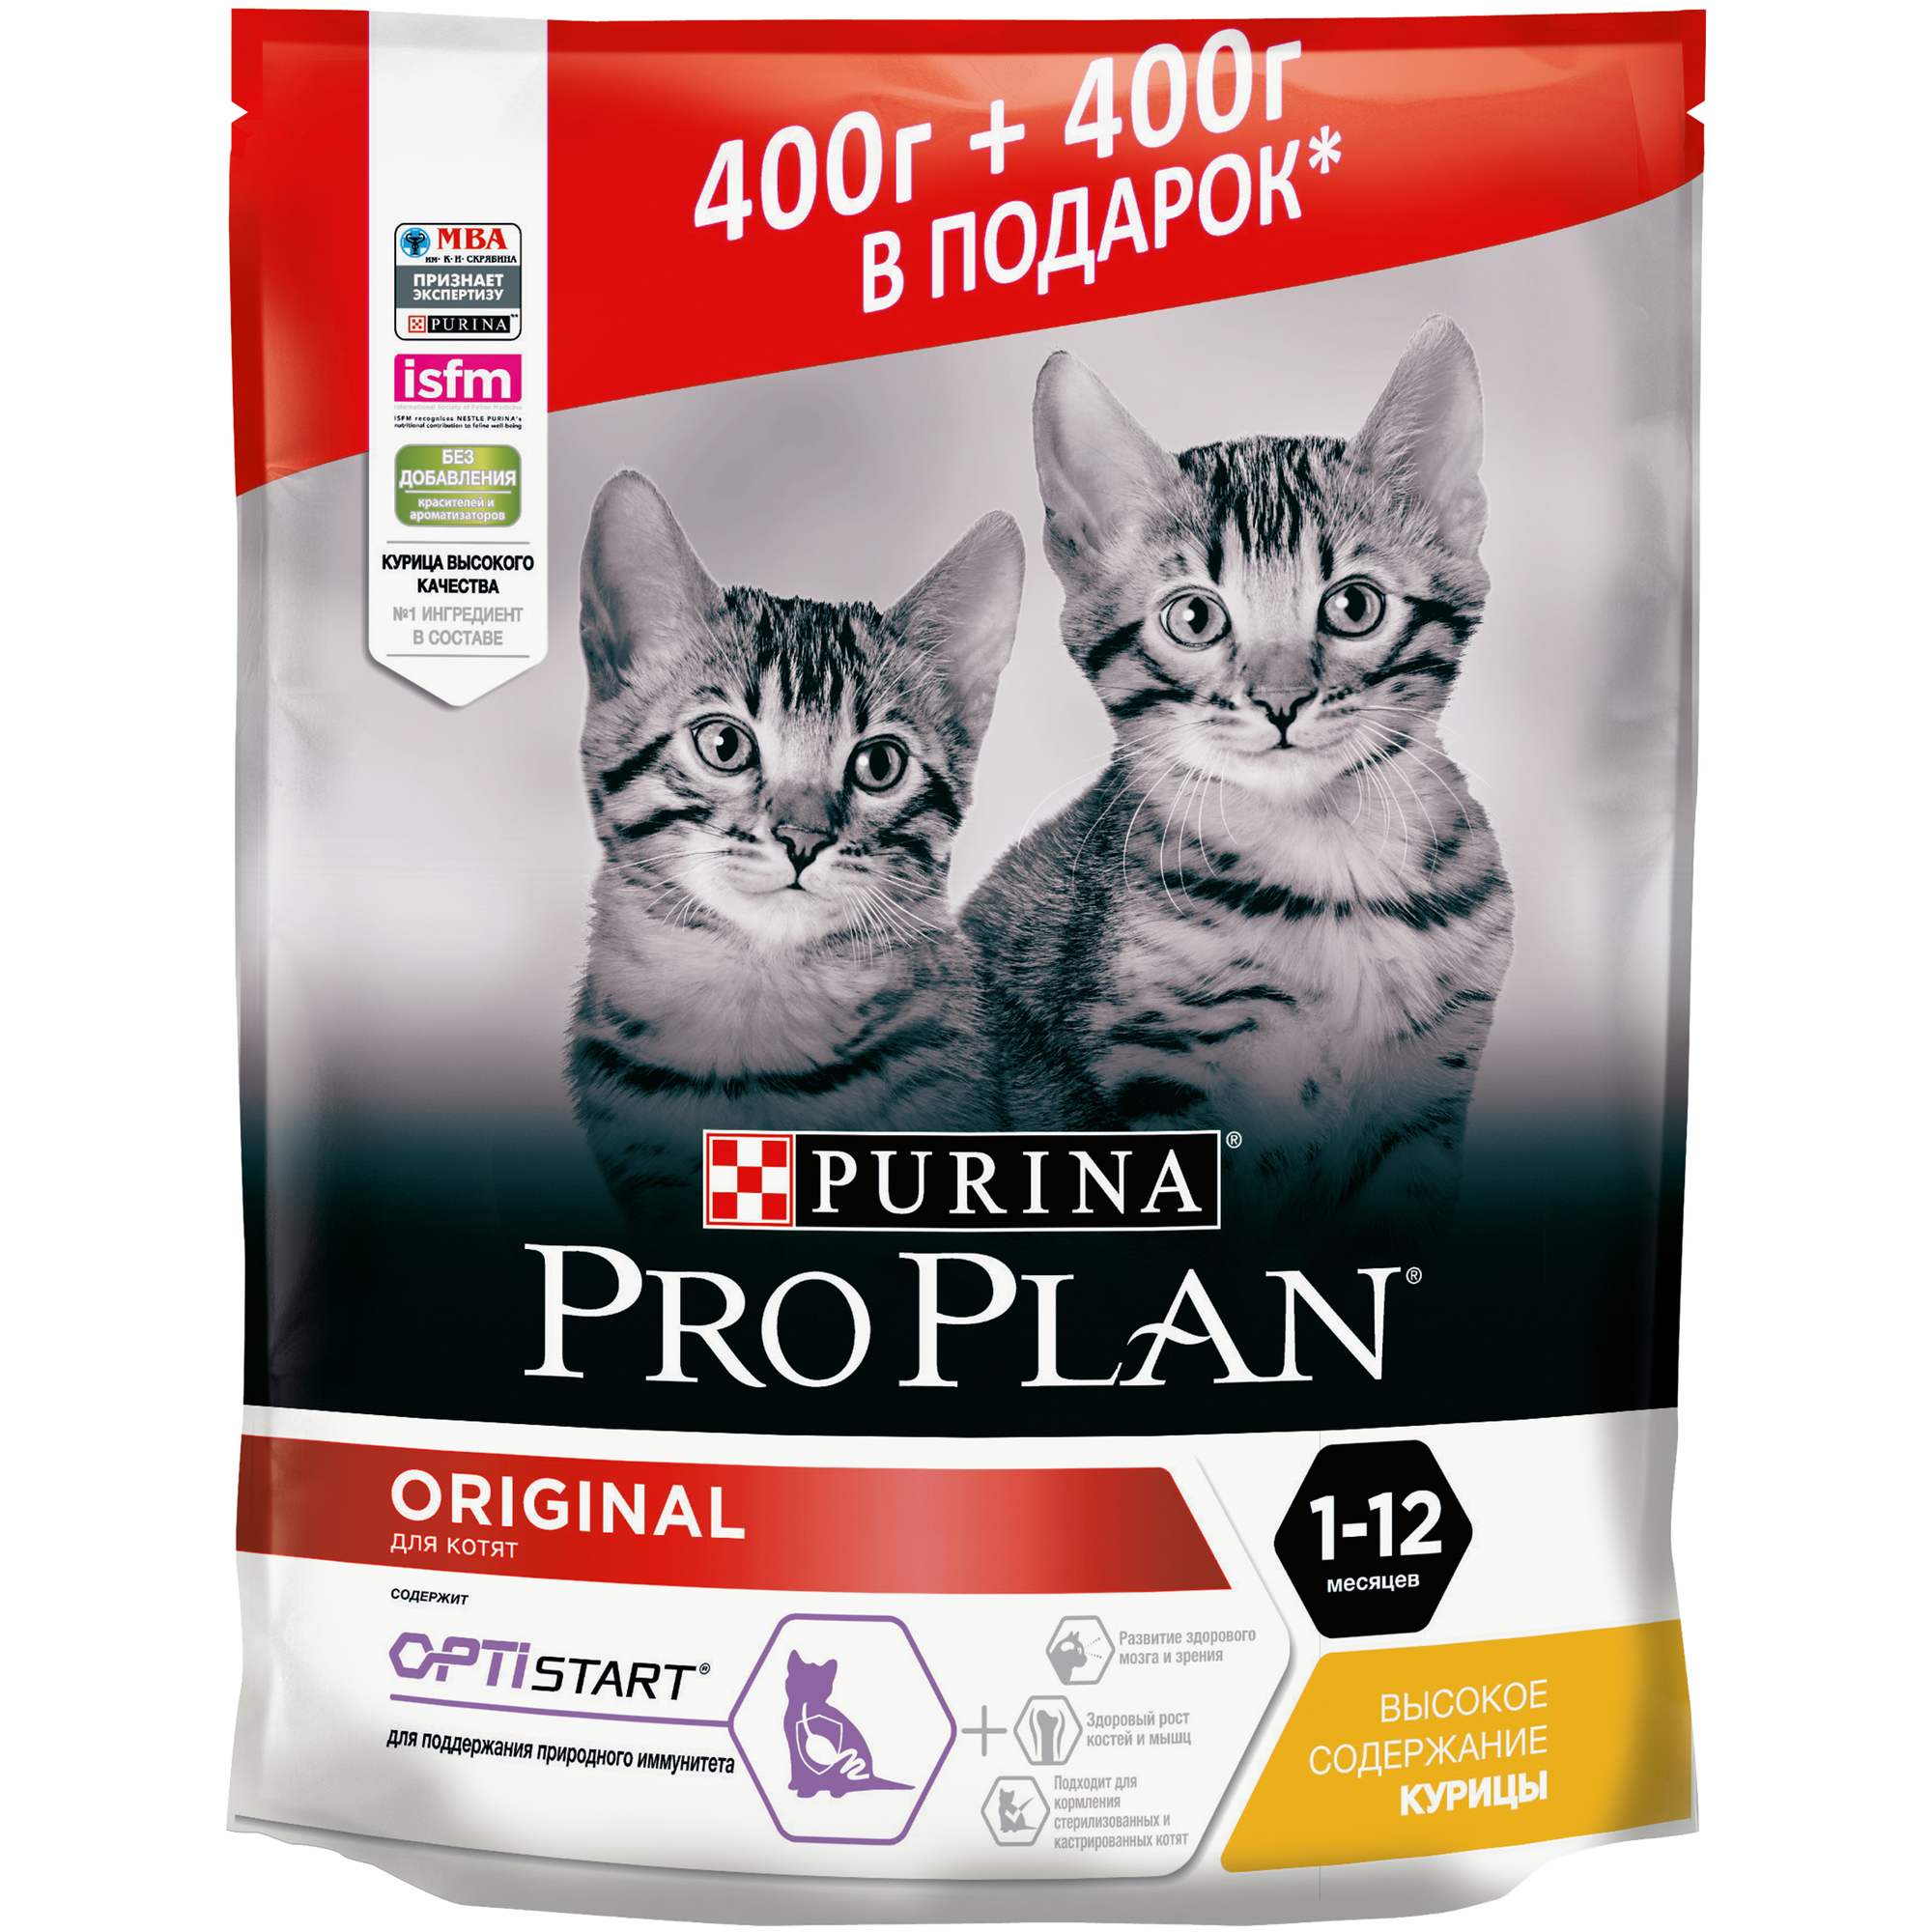 Промопак: Сухой корм Purina Pro Plan для котят от 1 до 12 месяцев, с курицей, Пакет, 400 + 400 г